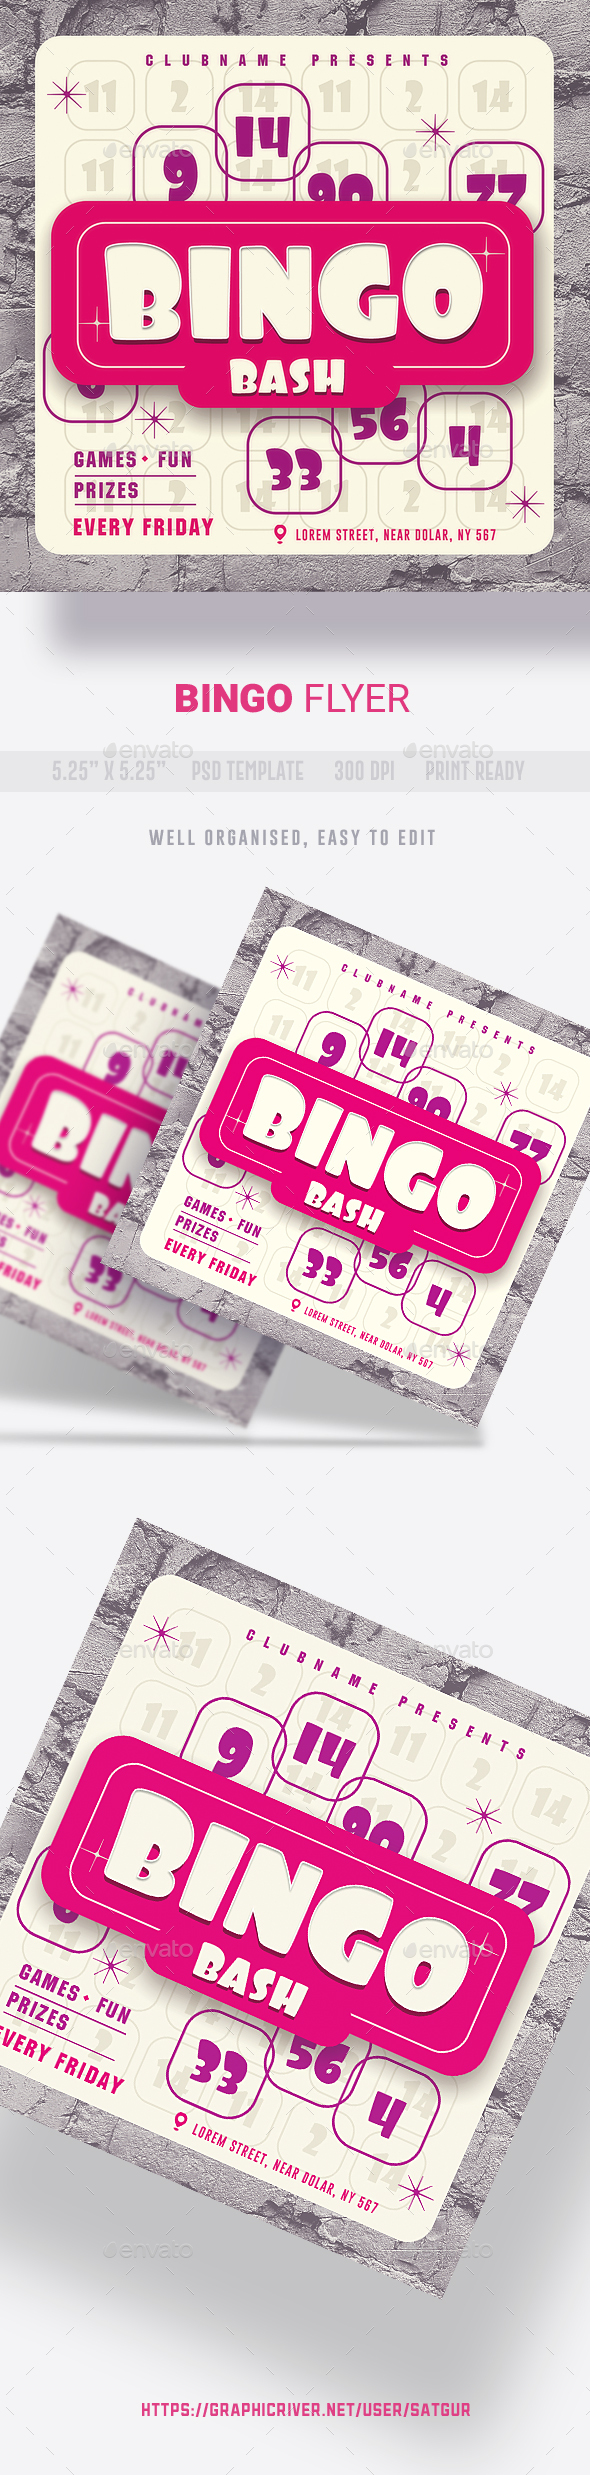 Bingo Flyer Template - PSD